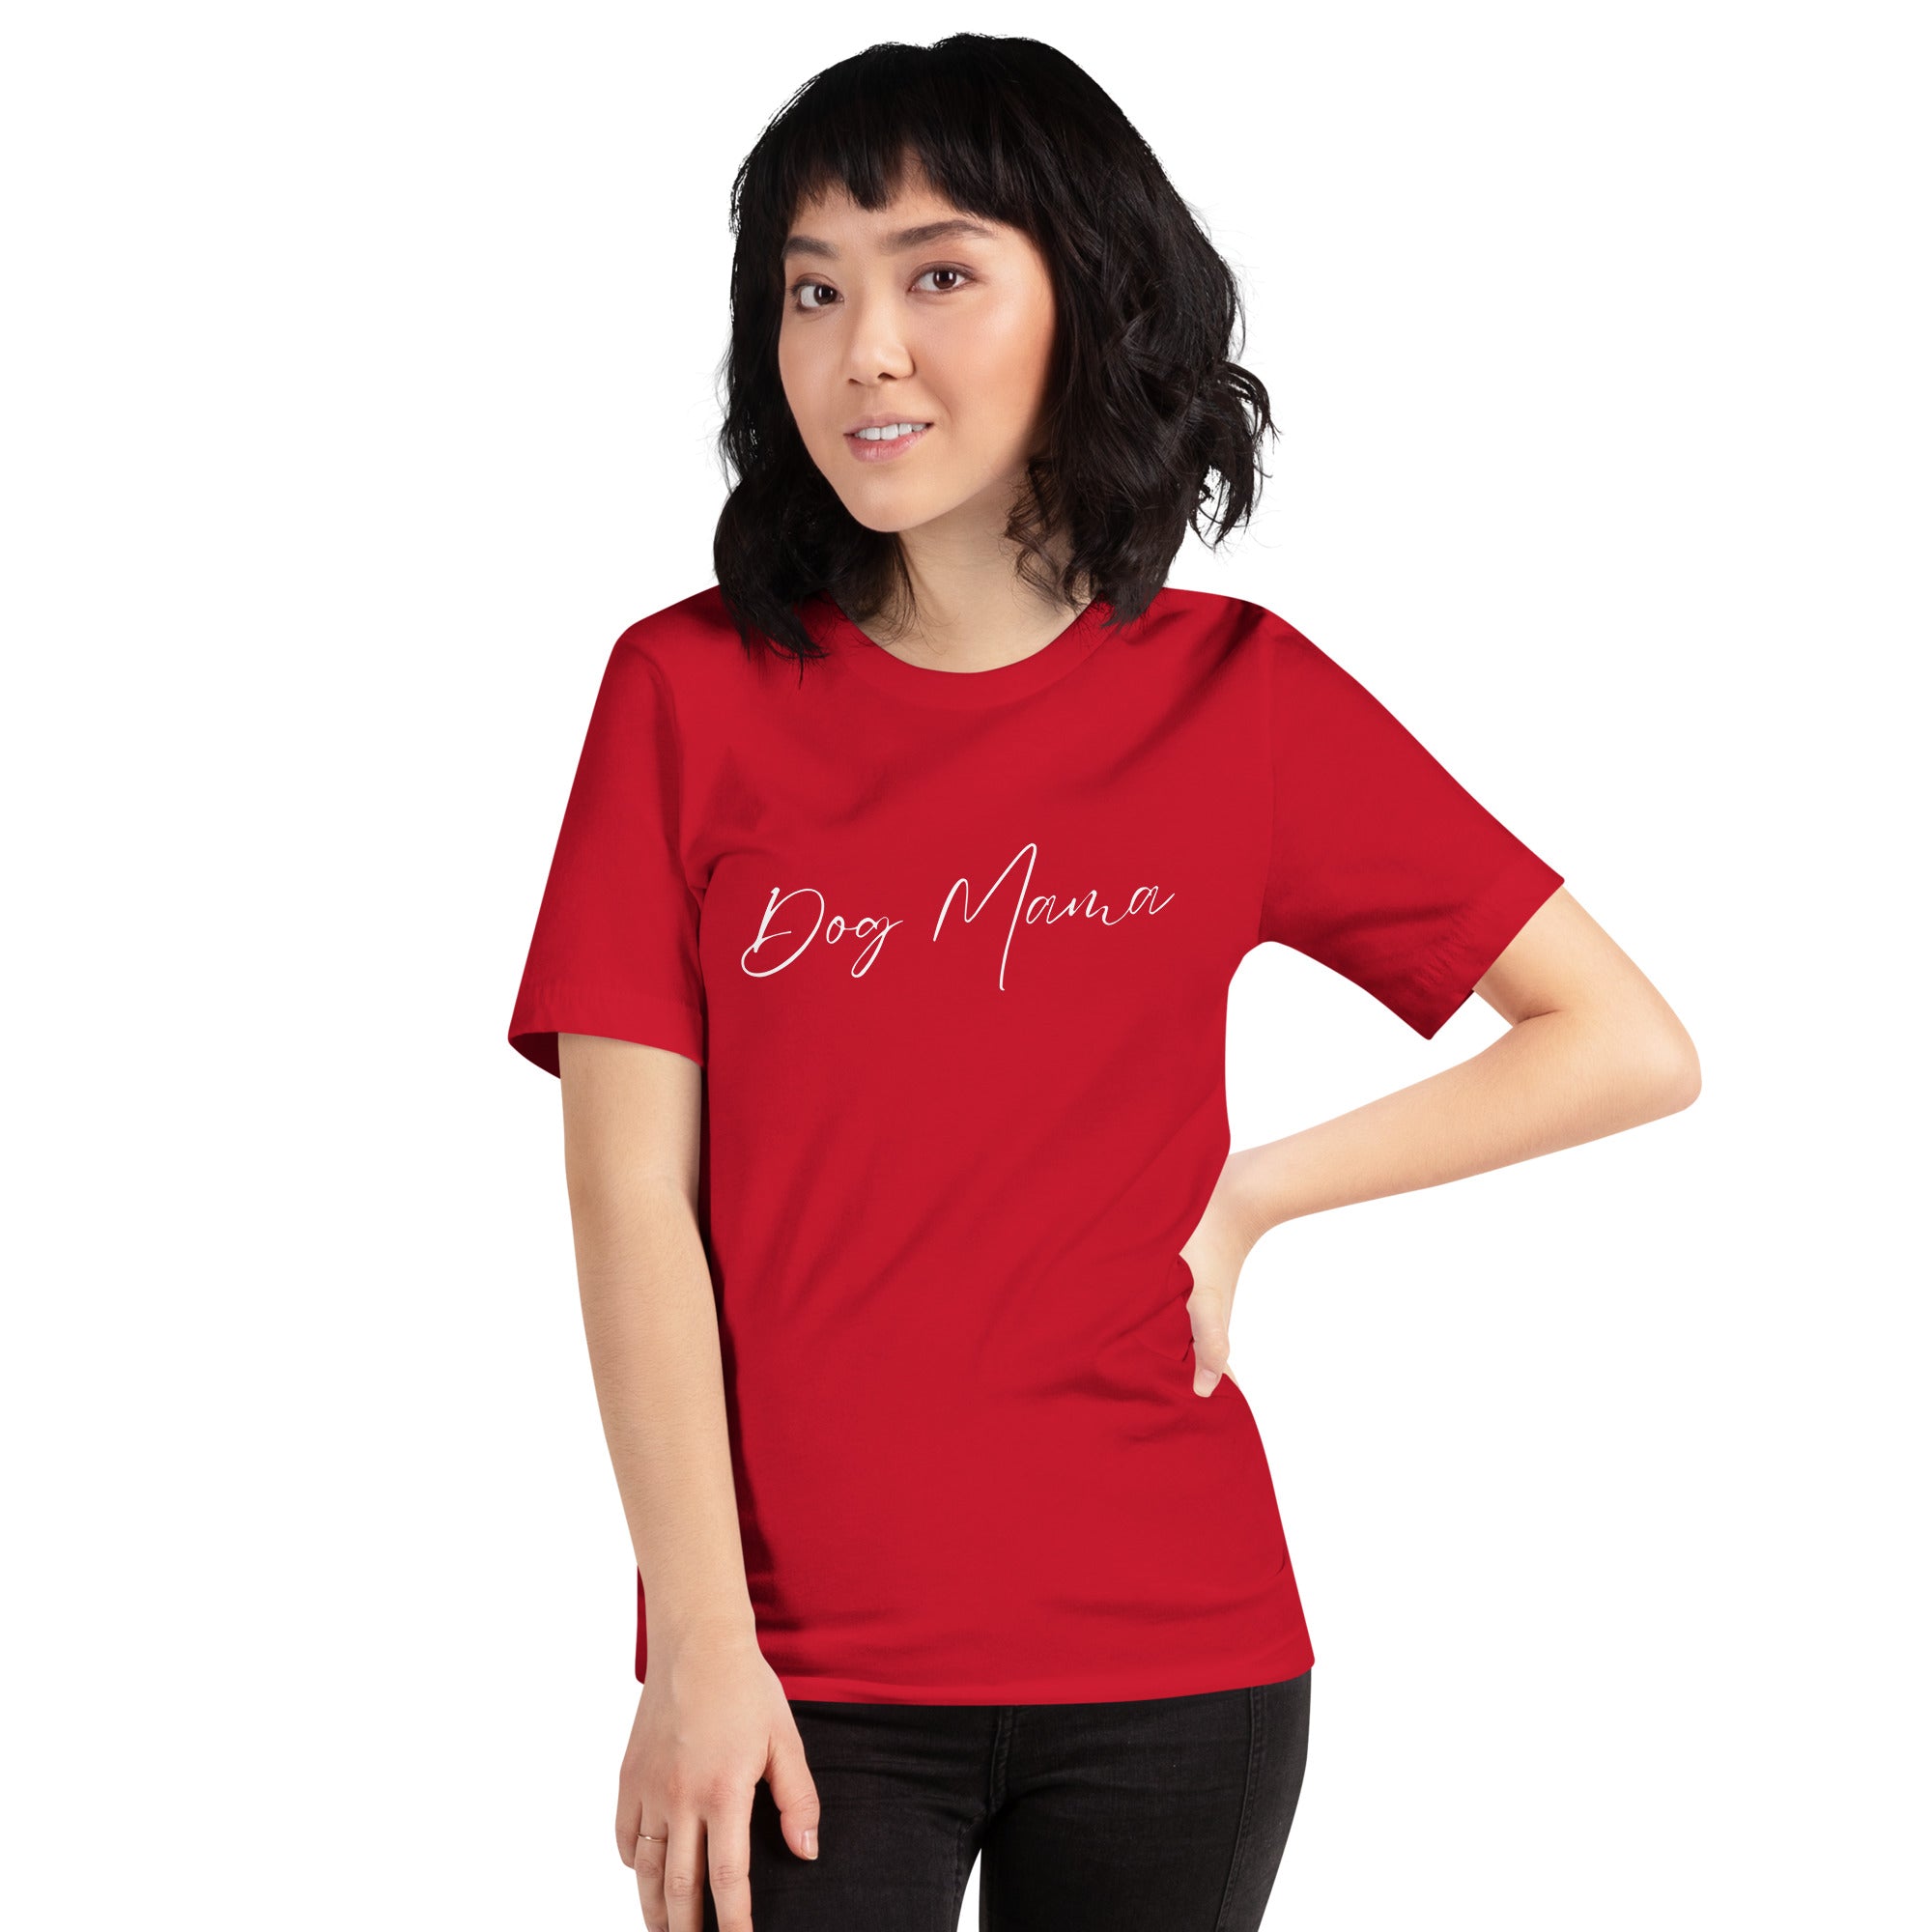 Dog Mama Women's T-Shirt